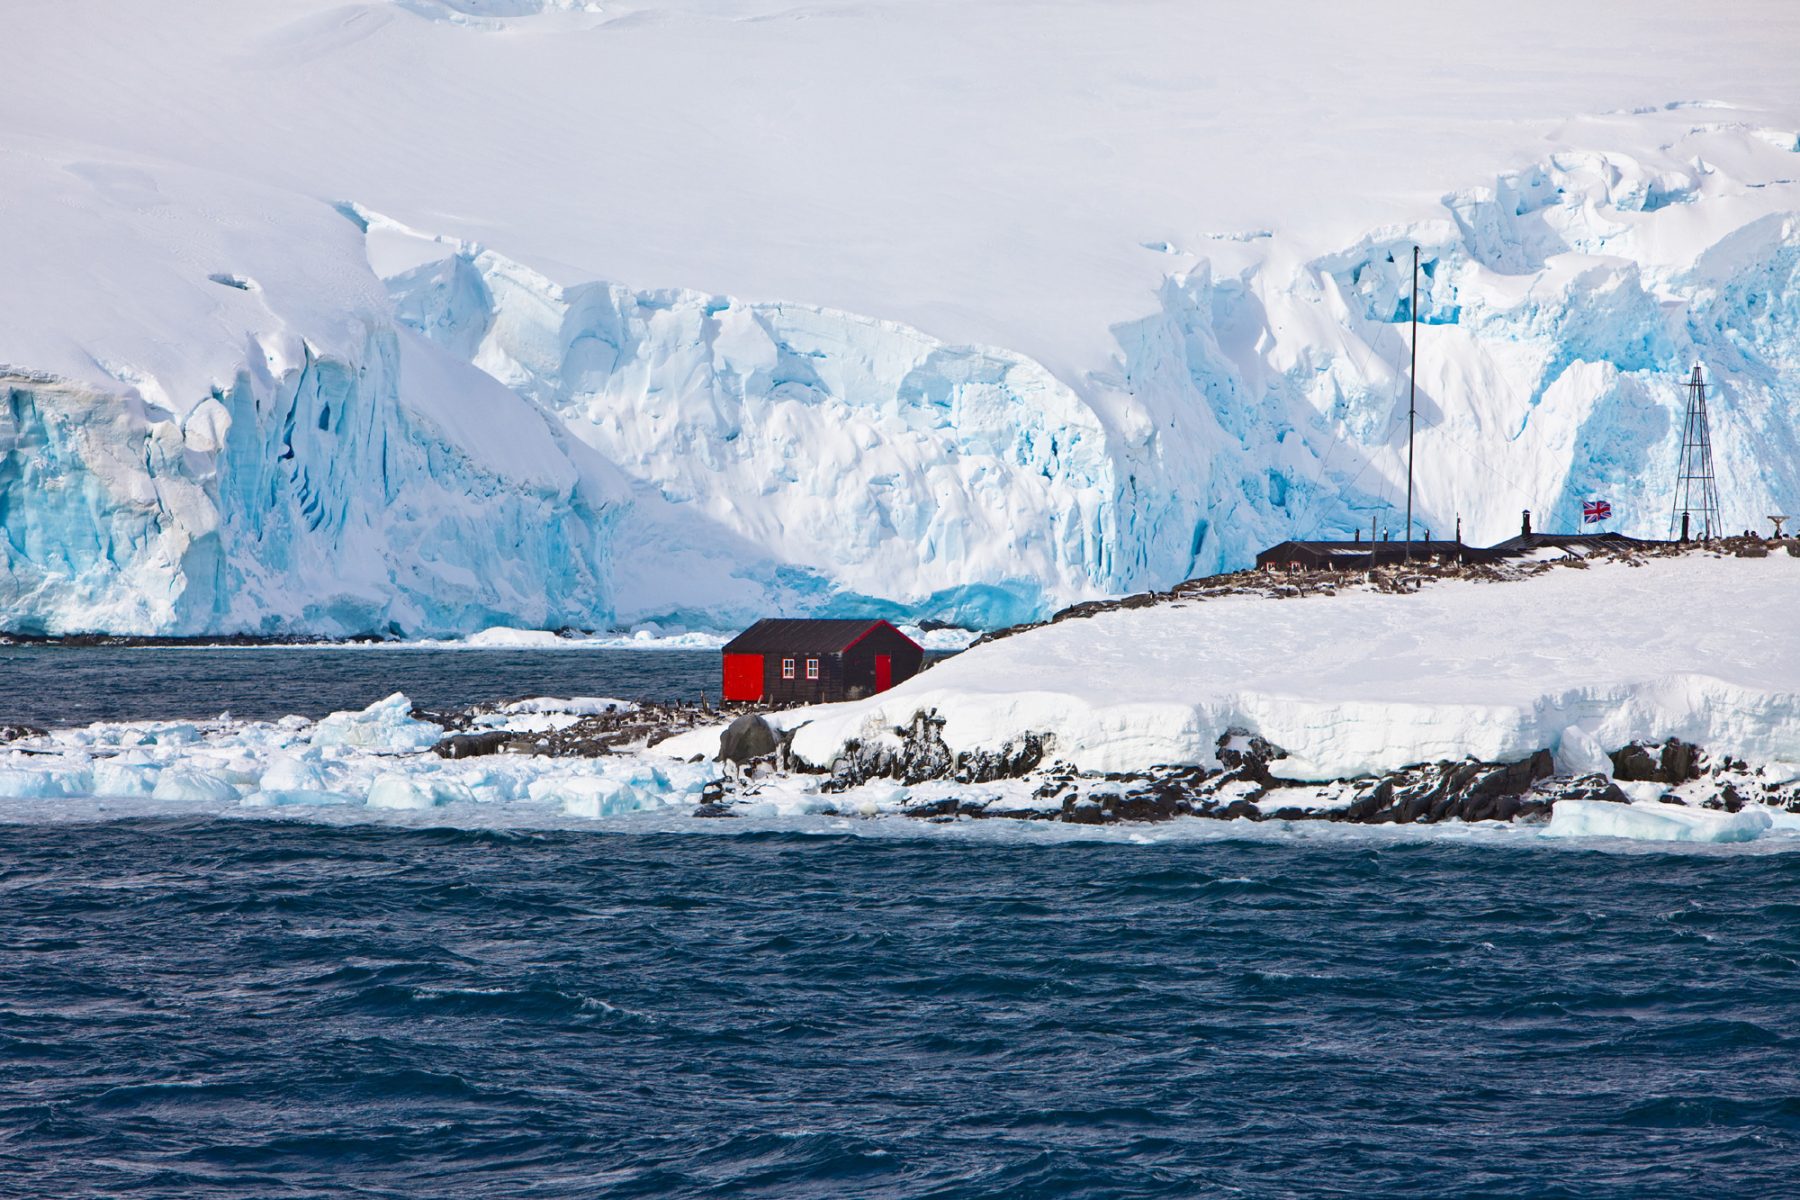 antarctic peninsula port lockroy hut istk